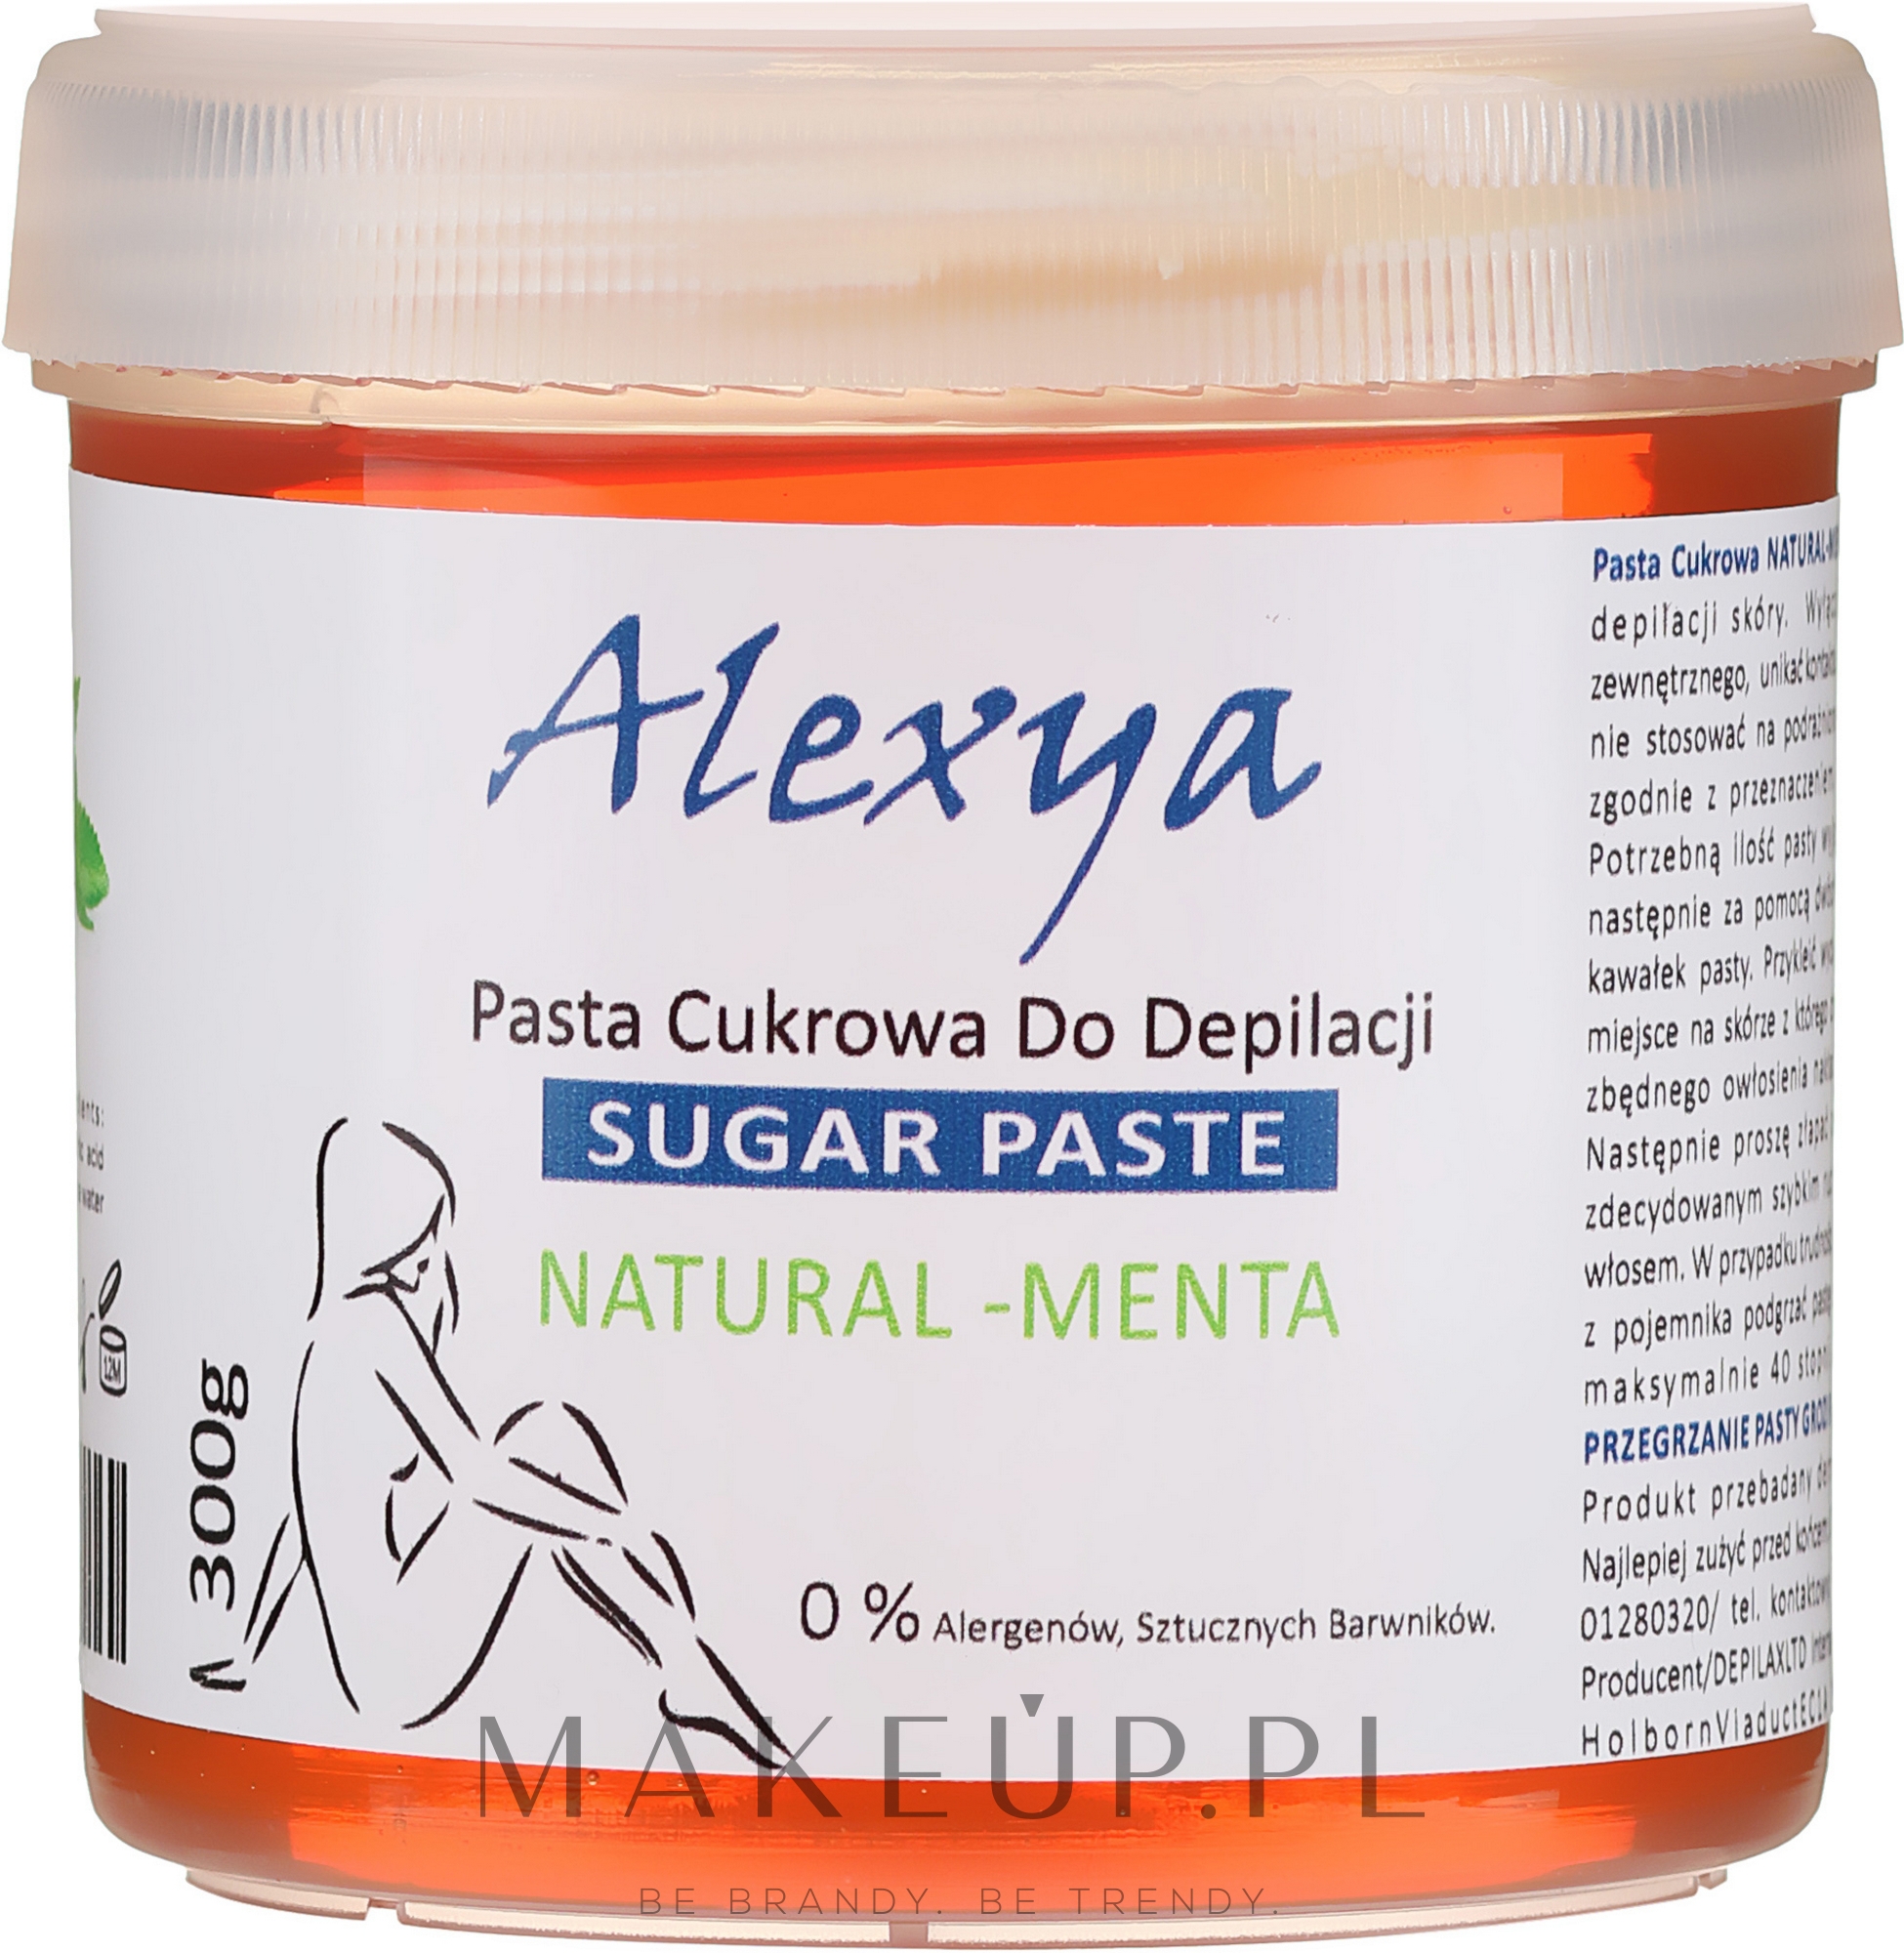 Pasta cukrowa do depilacji Mięta - Alexya Sugar Paste Natural Menta  — Zdjęcie 300 g